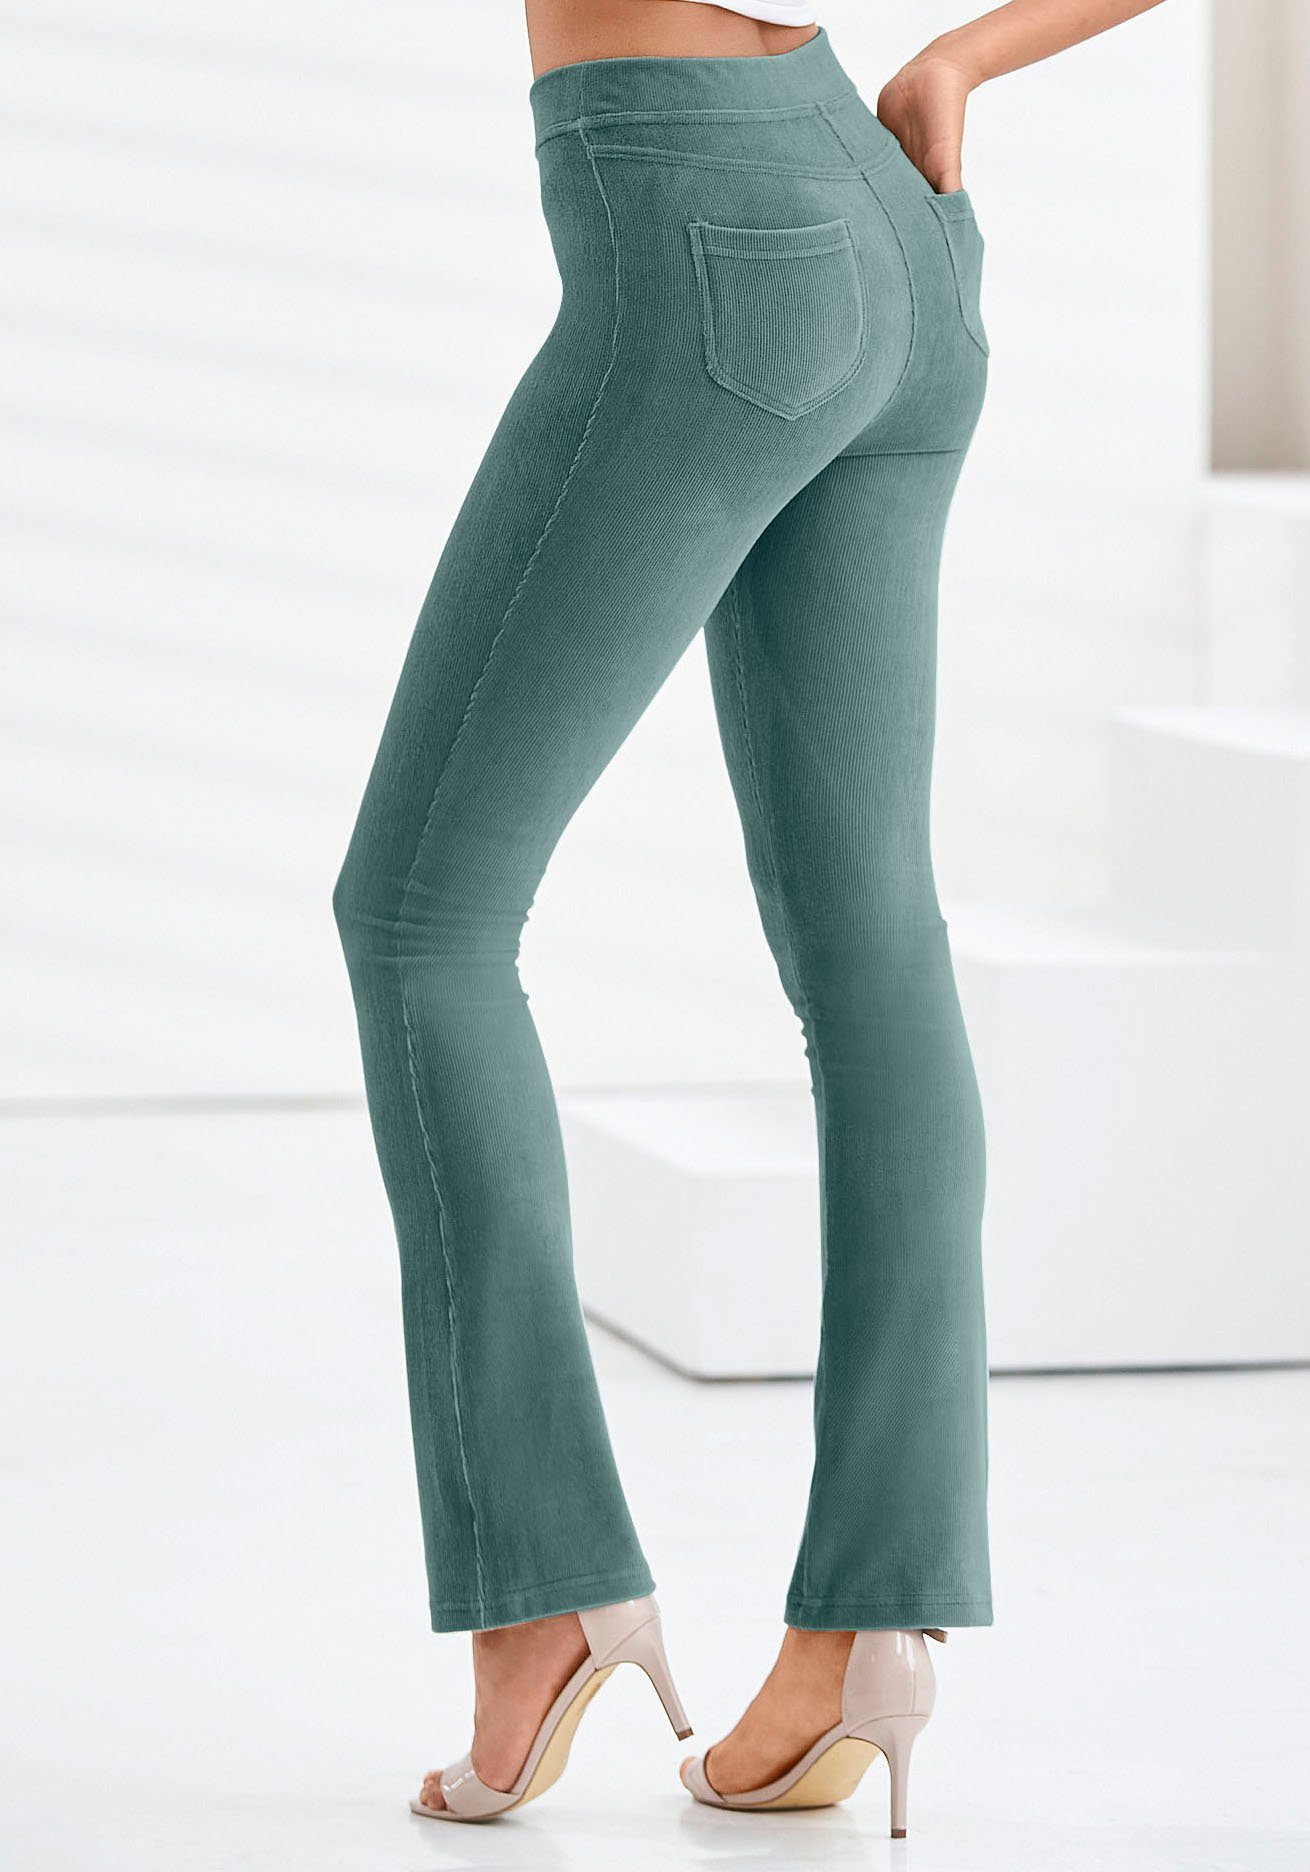 LASCANA Jazzpants aus petrol Loungewear Cord-Optik, Material weichem in